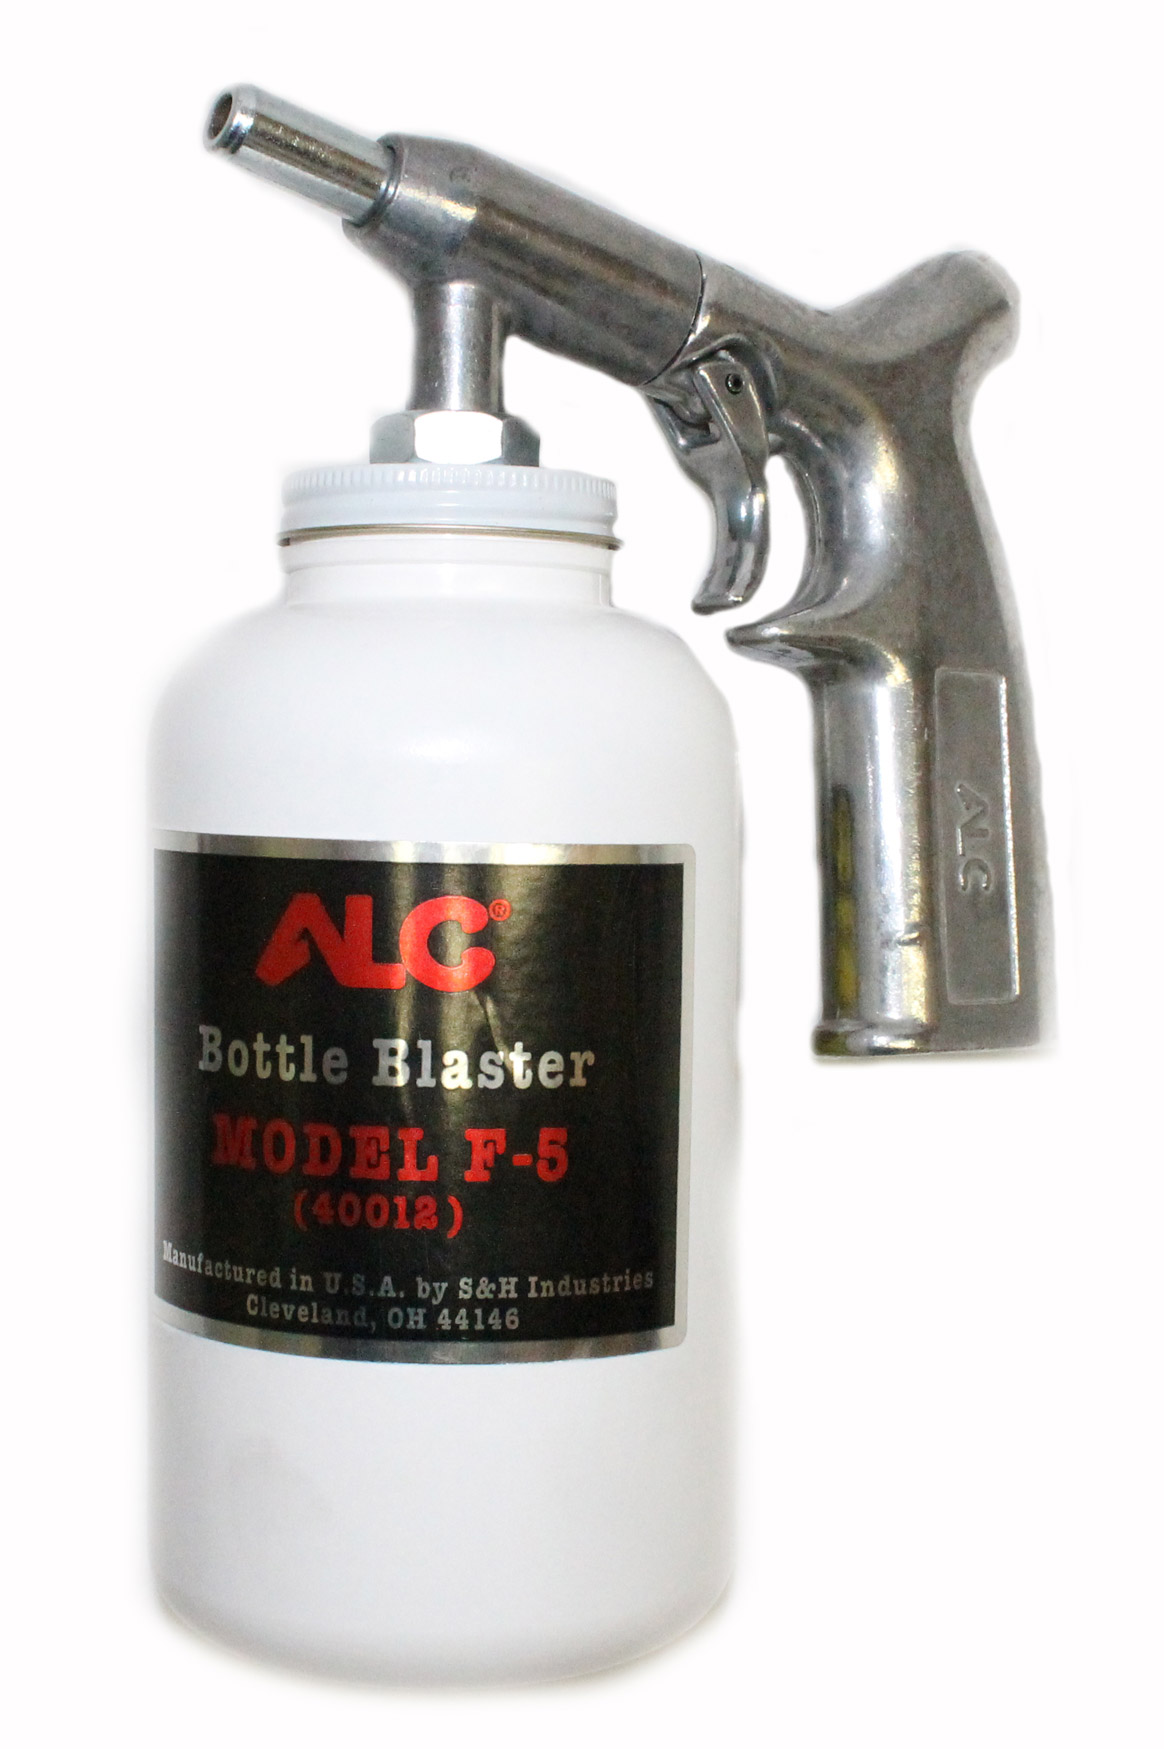 ALC USA Made Handheld Liquid Abrasive Media Bottle Blaster